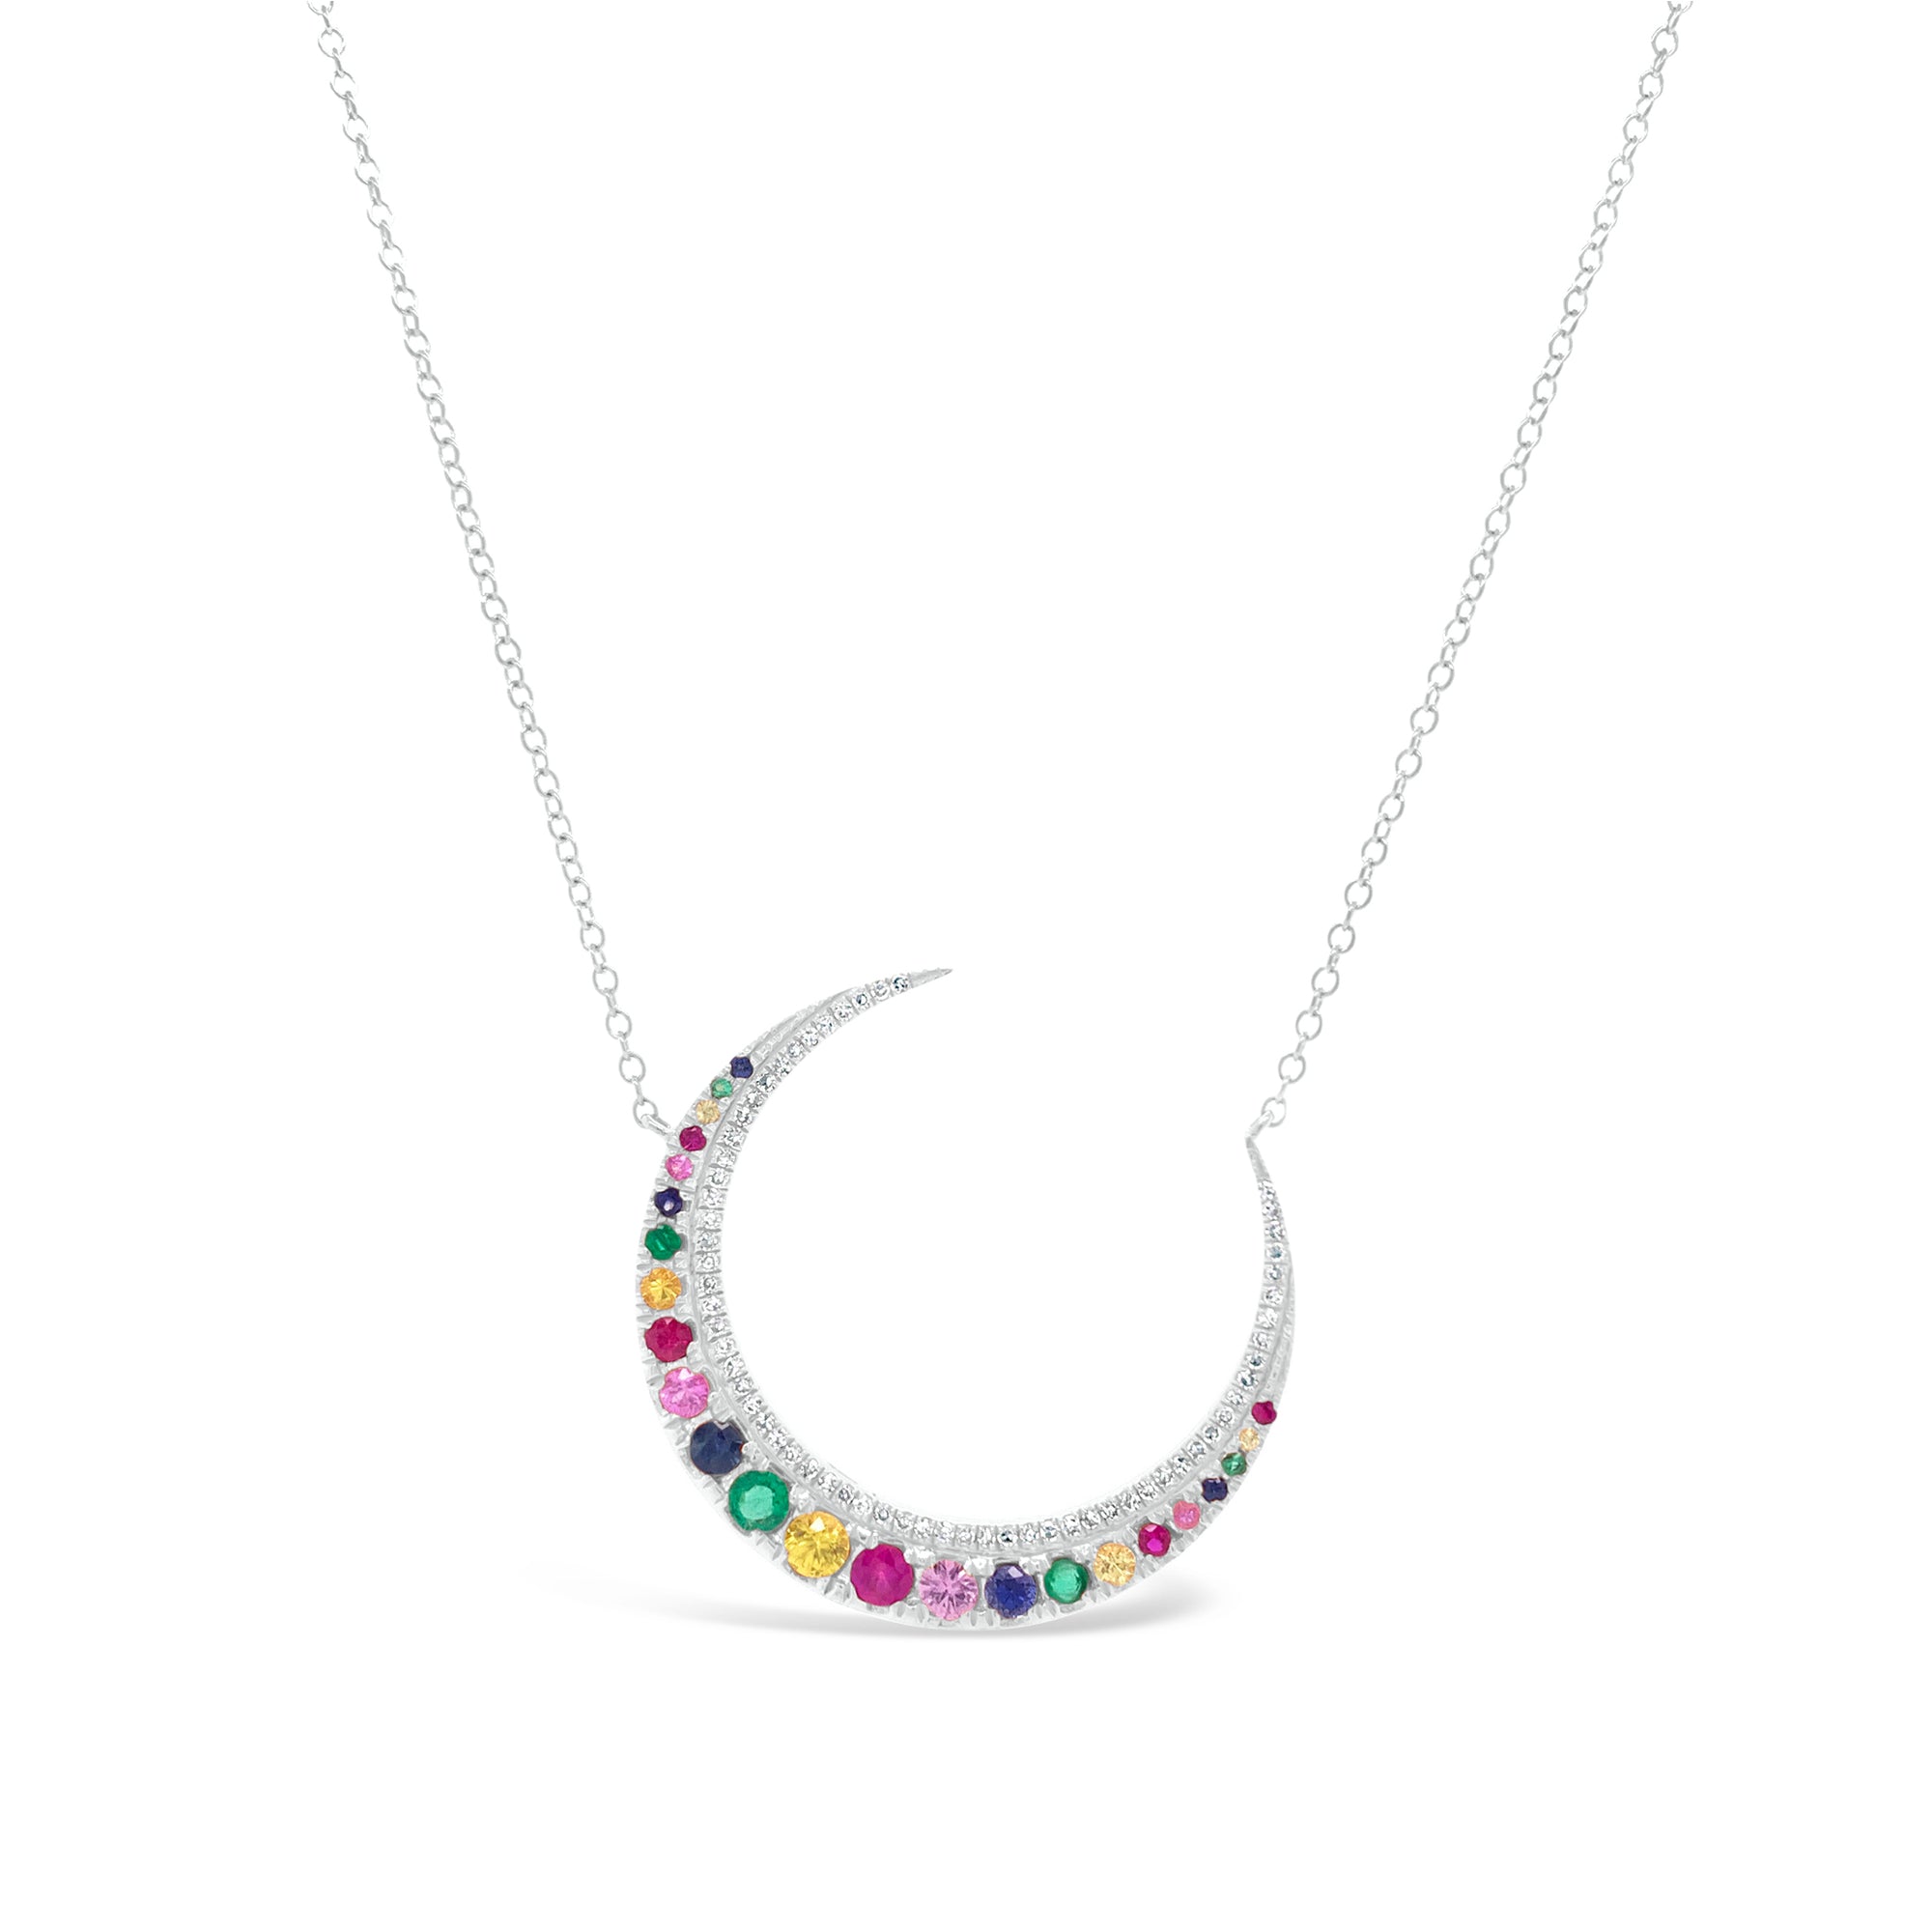 Rainbow Crescent Moon Necklace  -14K 3.70GR  -24 MC 0.65 total carat weight (gemstones)  -62 diamonds 0.14 total carat weight 